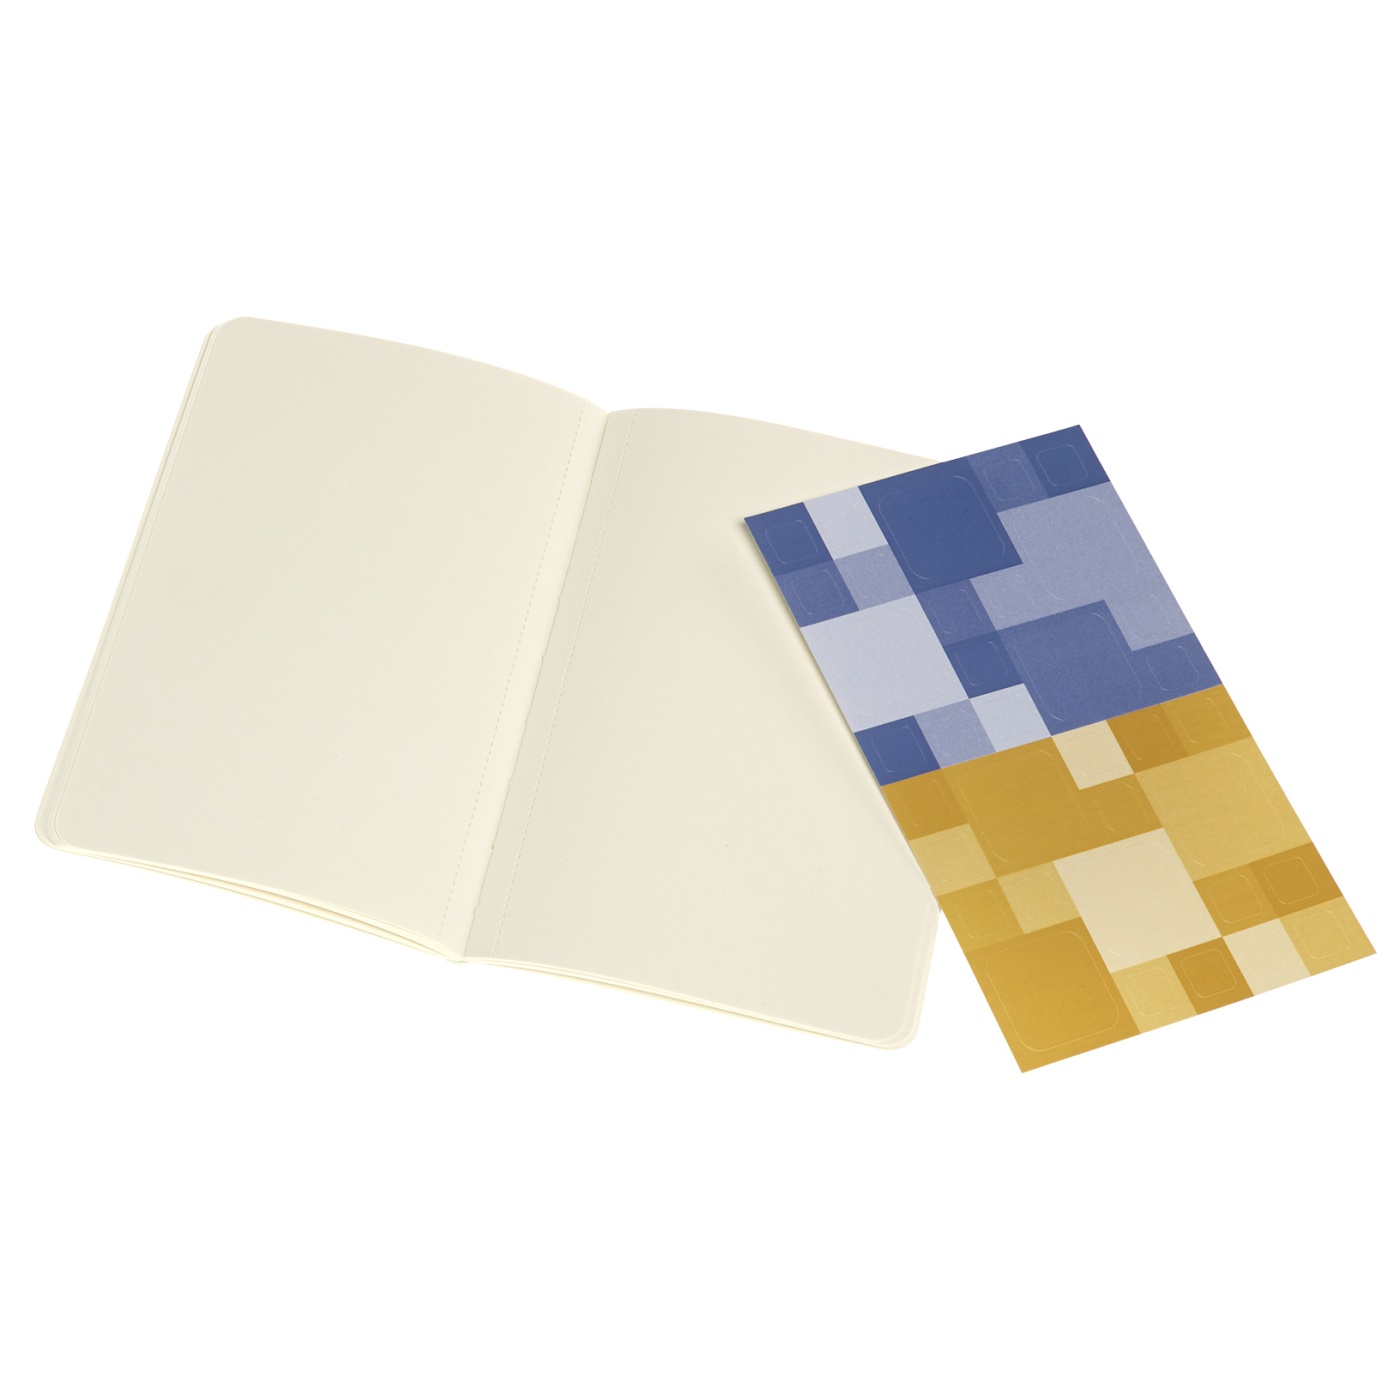 Volant Pocket Blue/Yellow i gruppen  Papir & Blokk / Skrive og ta notater / Skriveblokker og hefter hos Pen Store (100343_r)